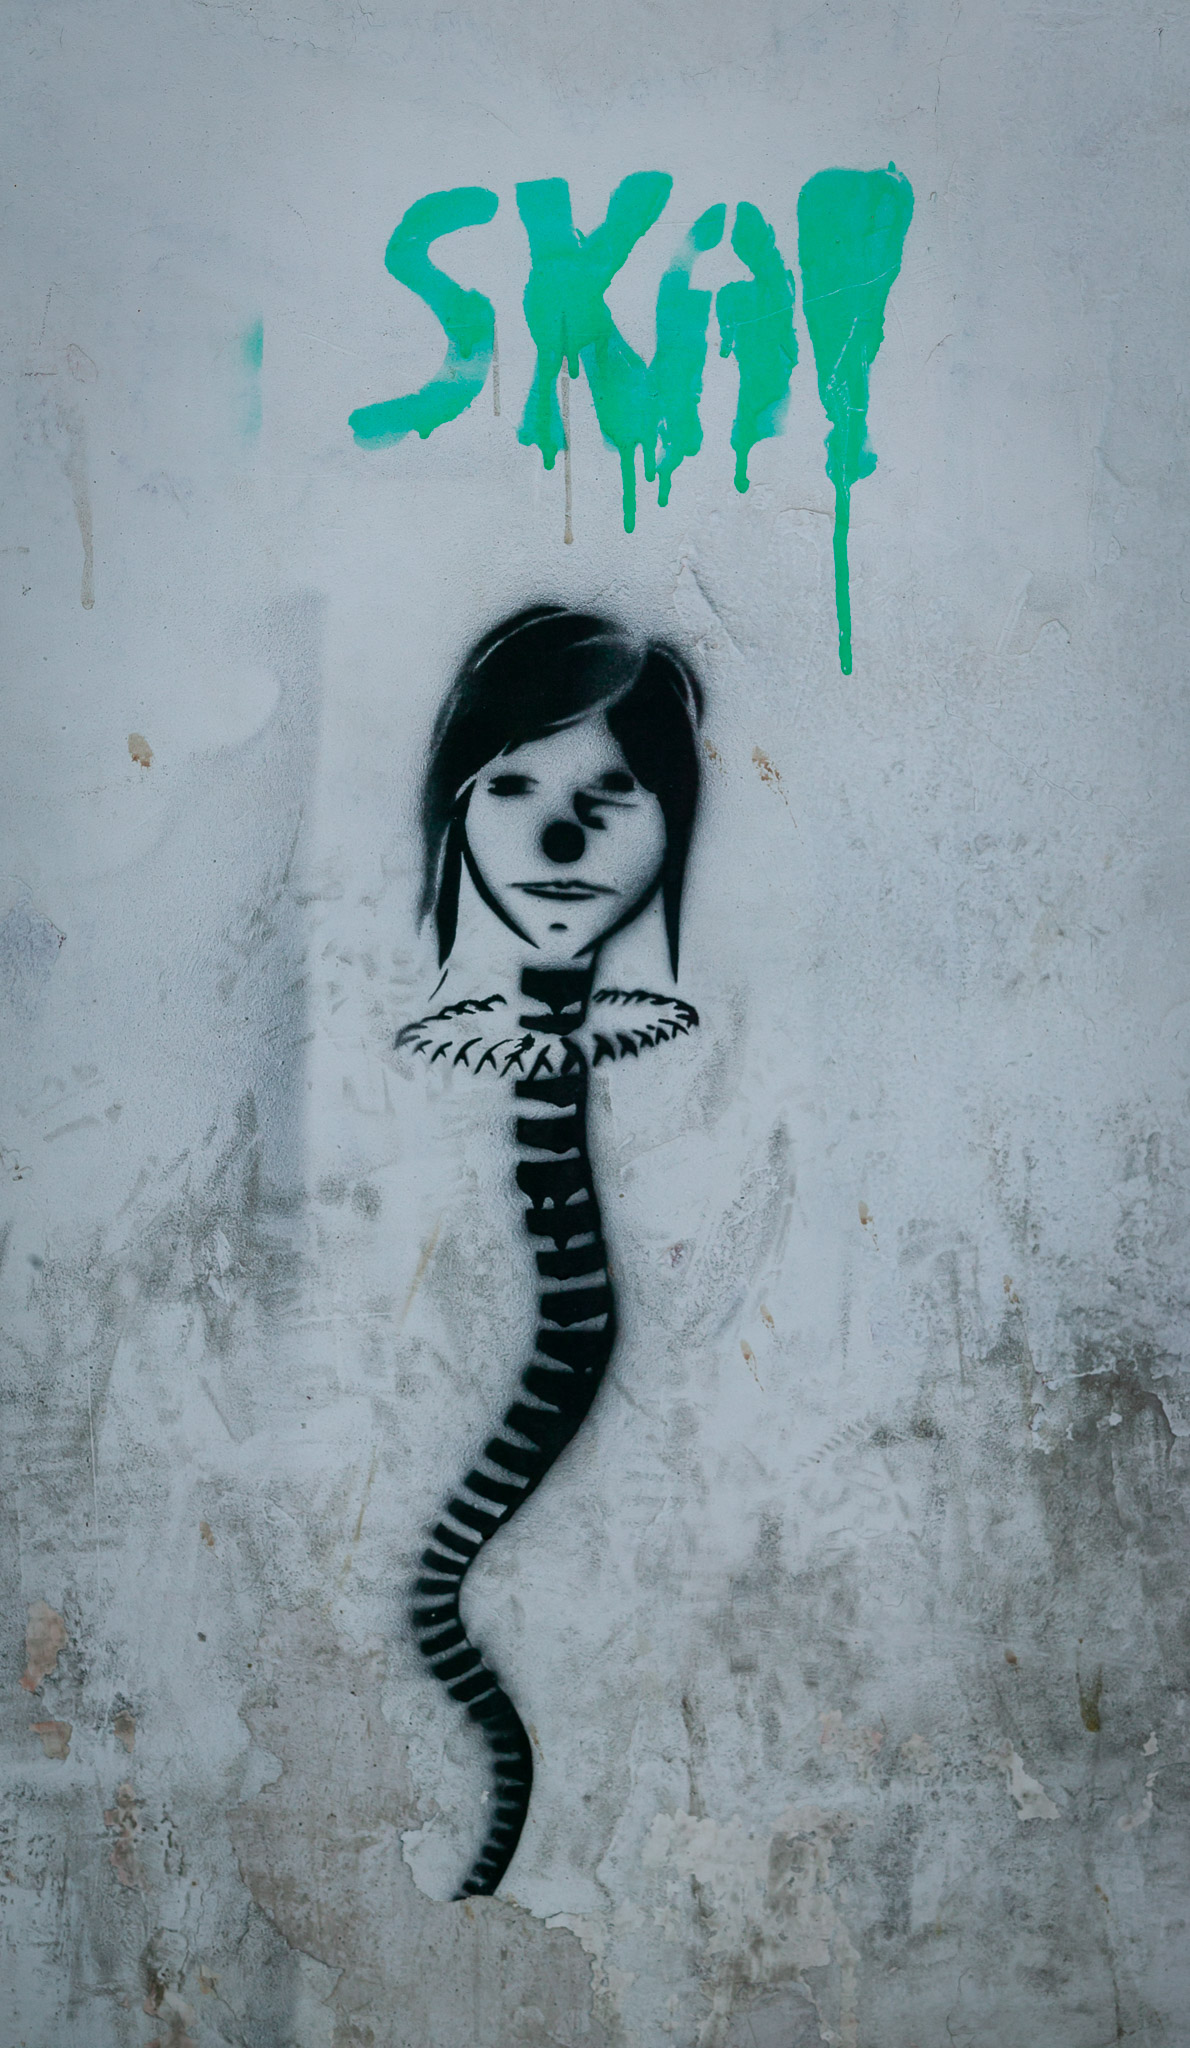 Valparaiso graffiti